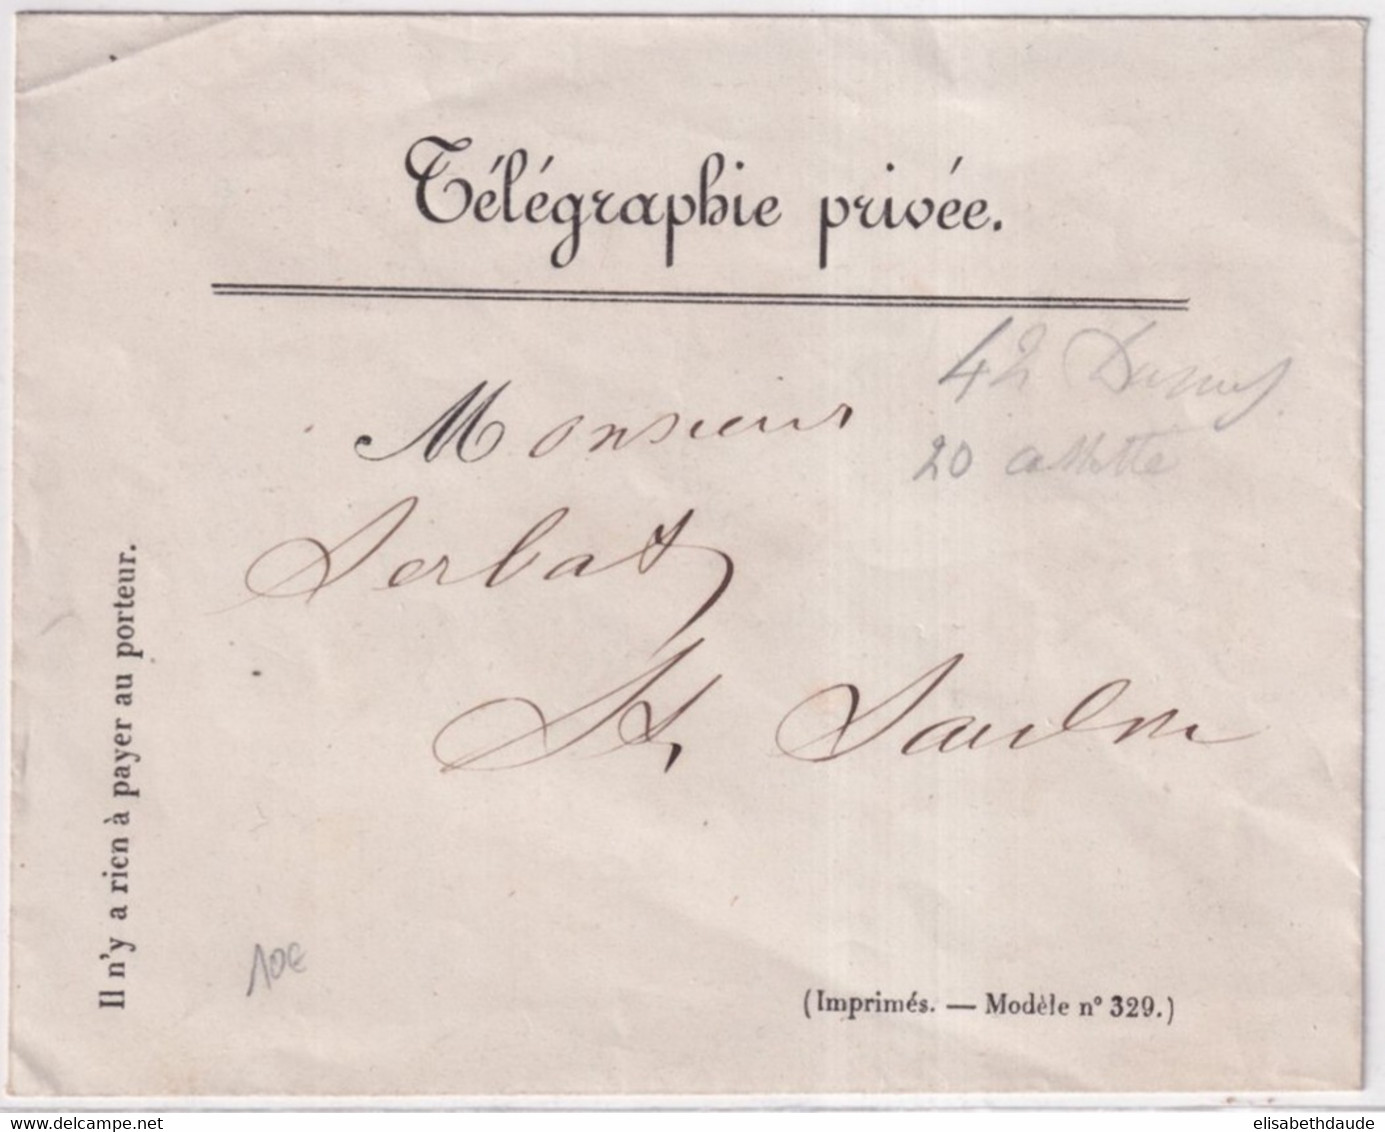 AVANT 1900 - ENVELOPPE TELEGRAPHIE PRIVEE DIRECTION De VALENCIENNES (NORD) - Telegraphie Und Telefon